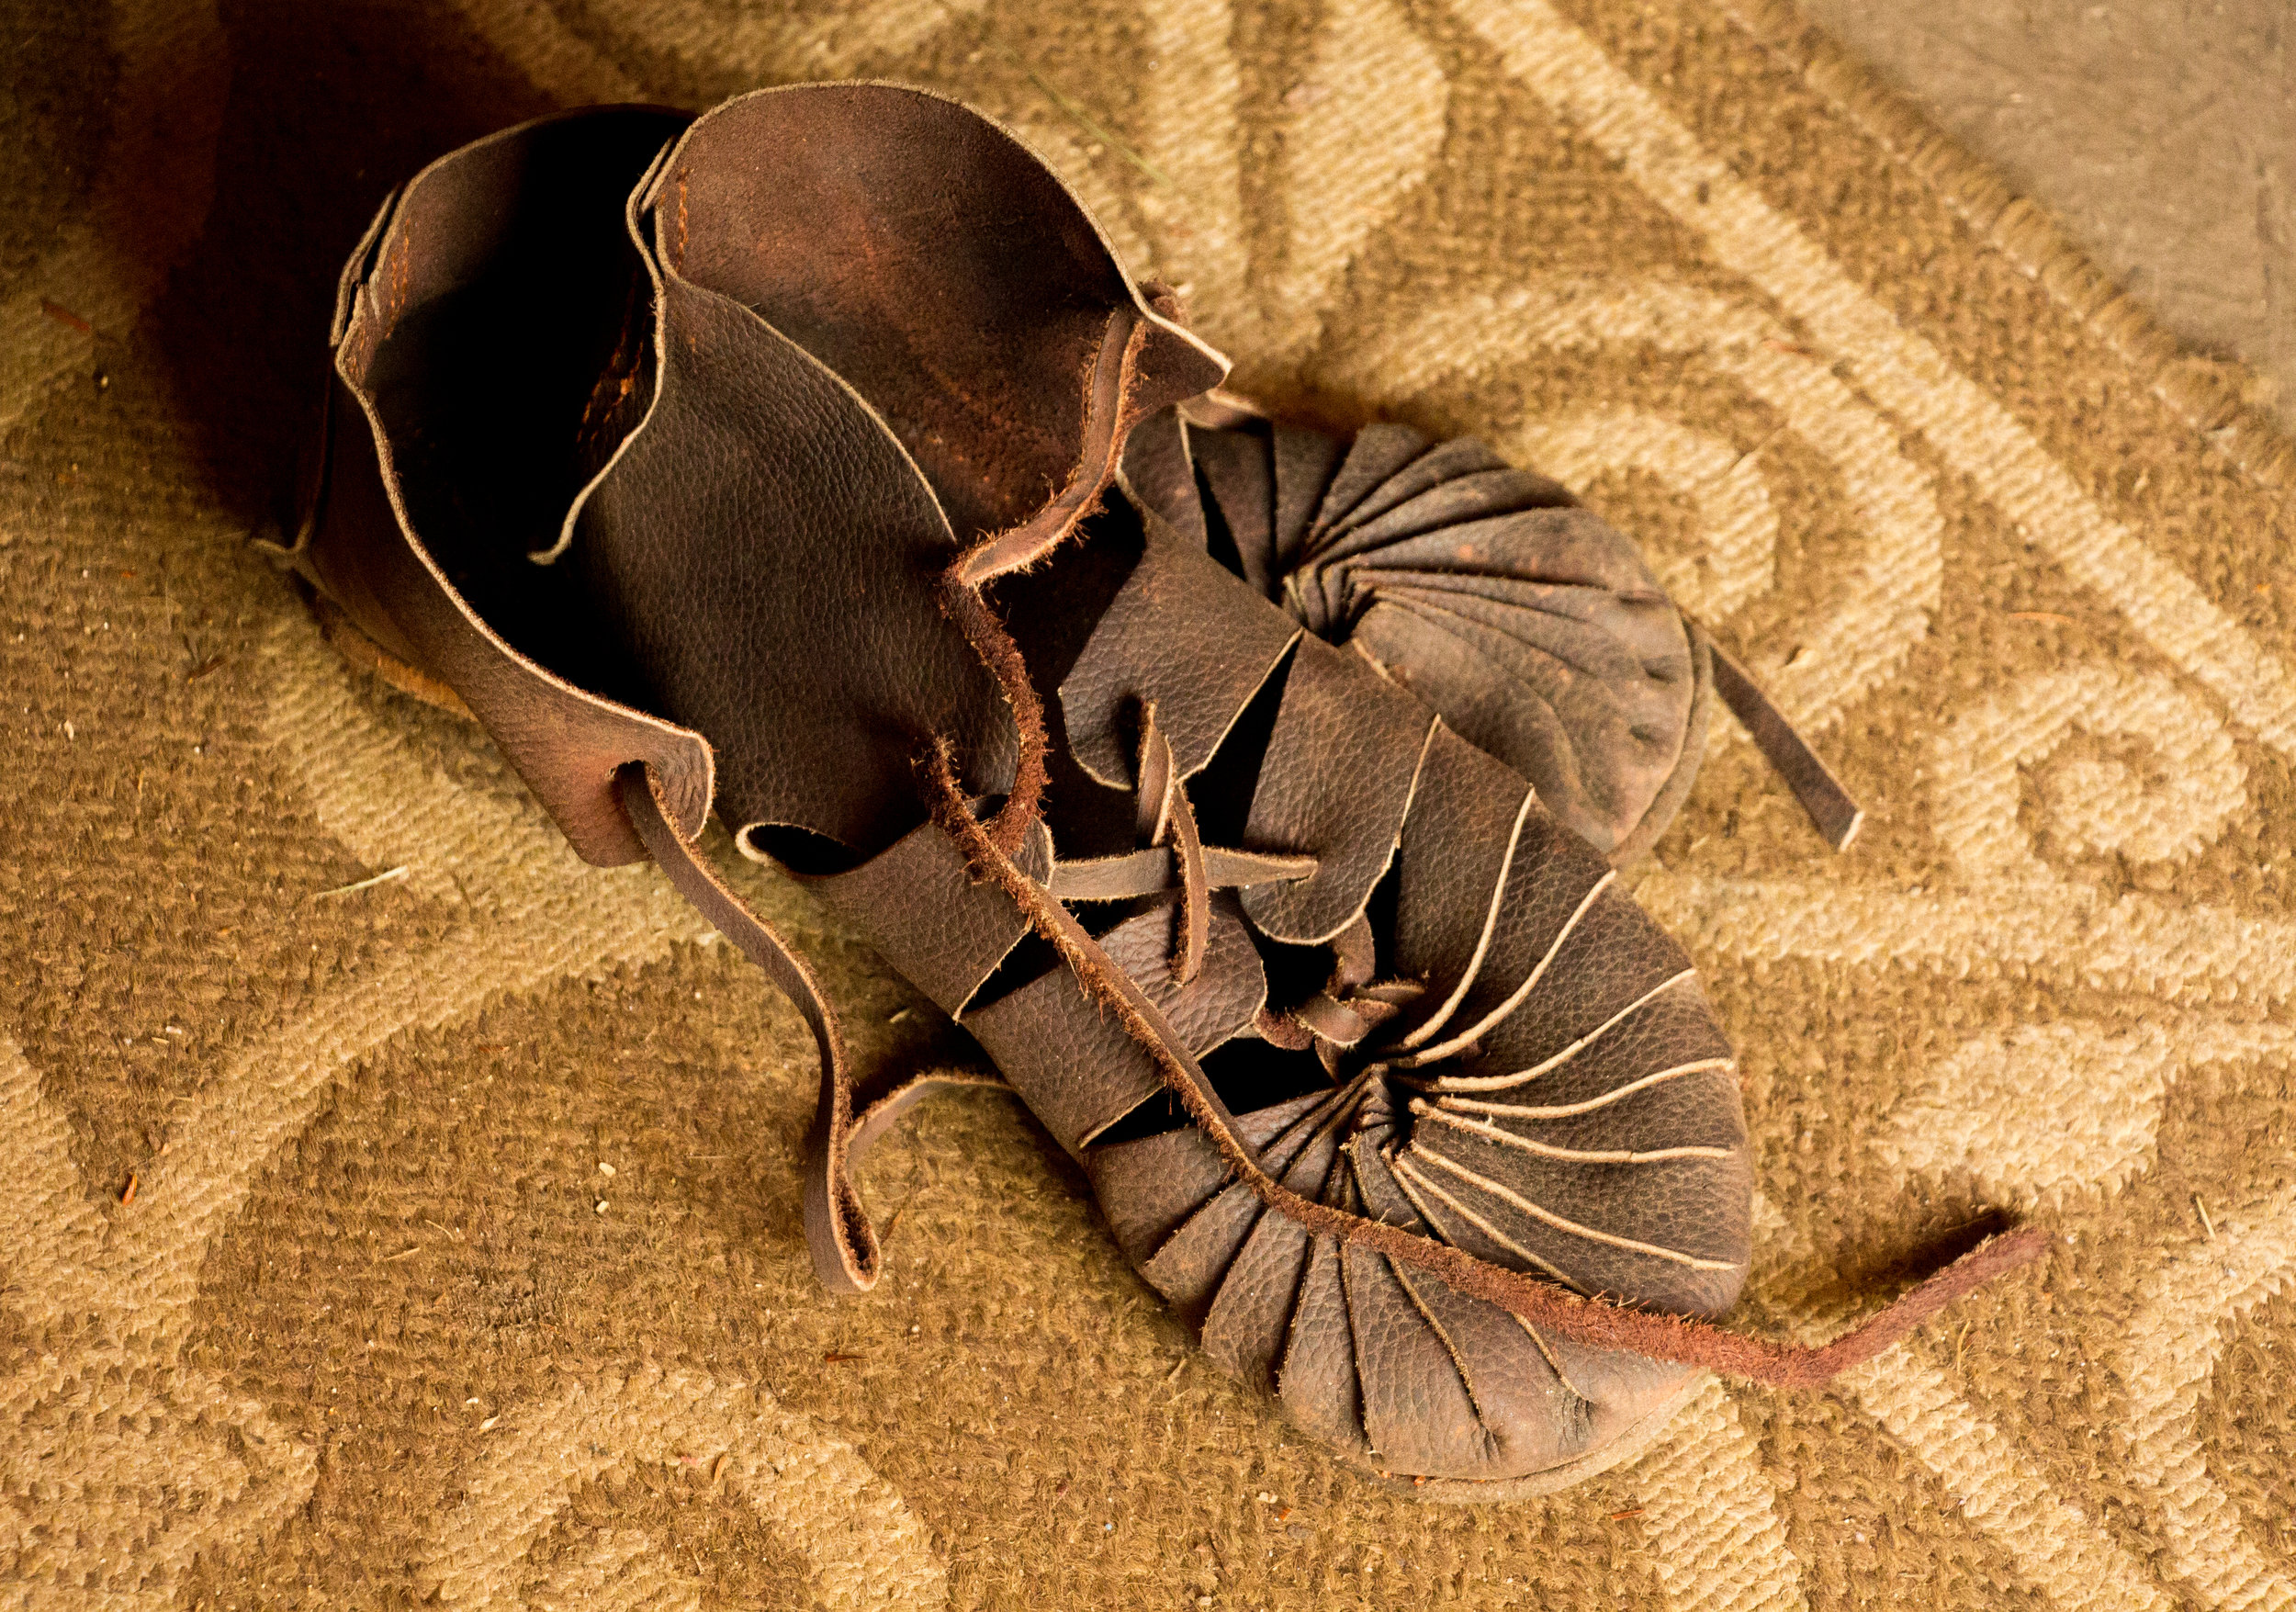  Shoes belonging to Adikan Rafenson. 